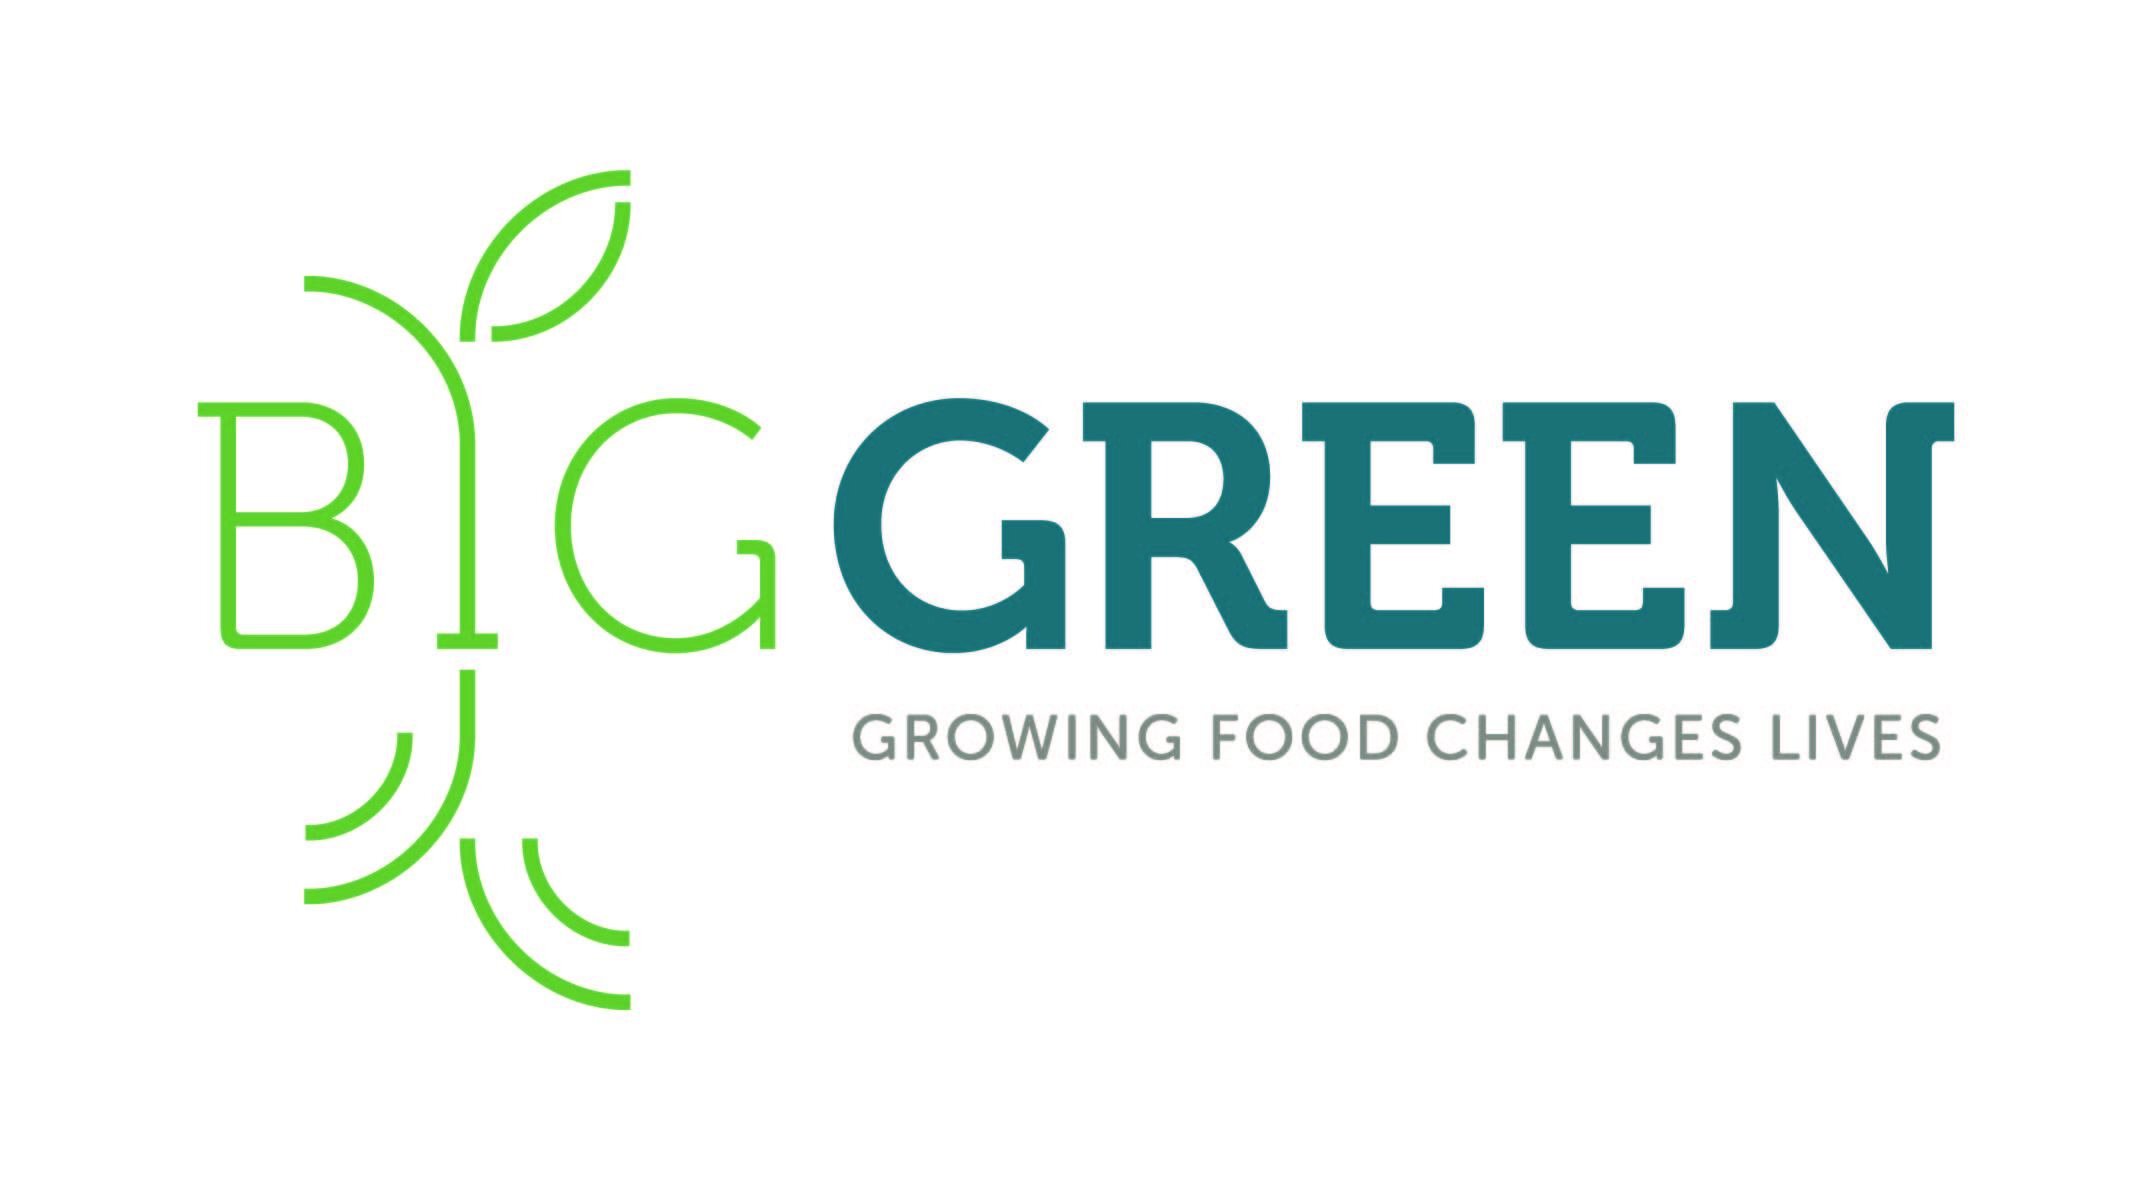 Big Green horz logo tagline _MKTG_NATL-01 (1) (1) - Laura Thompson.jpg